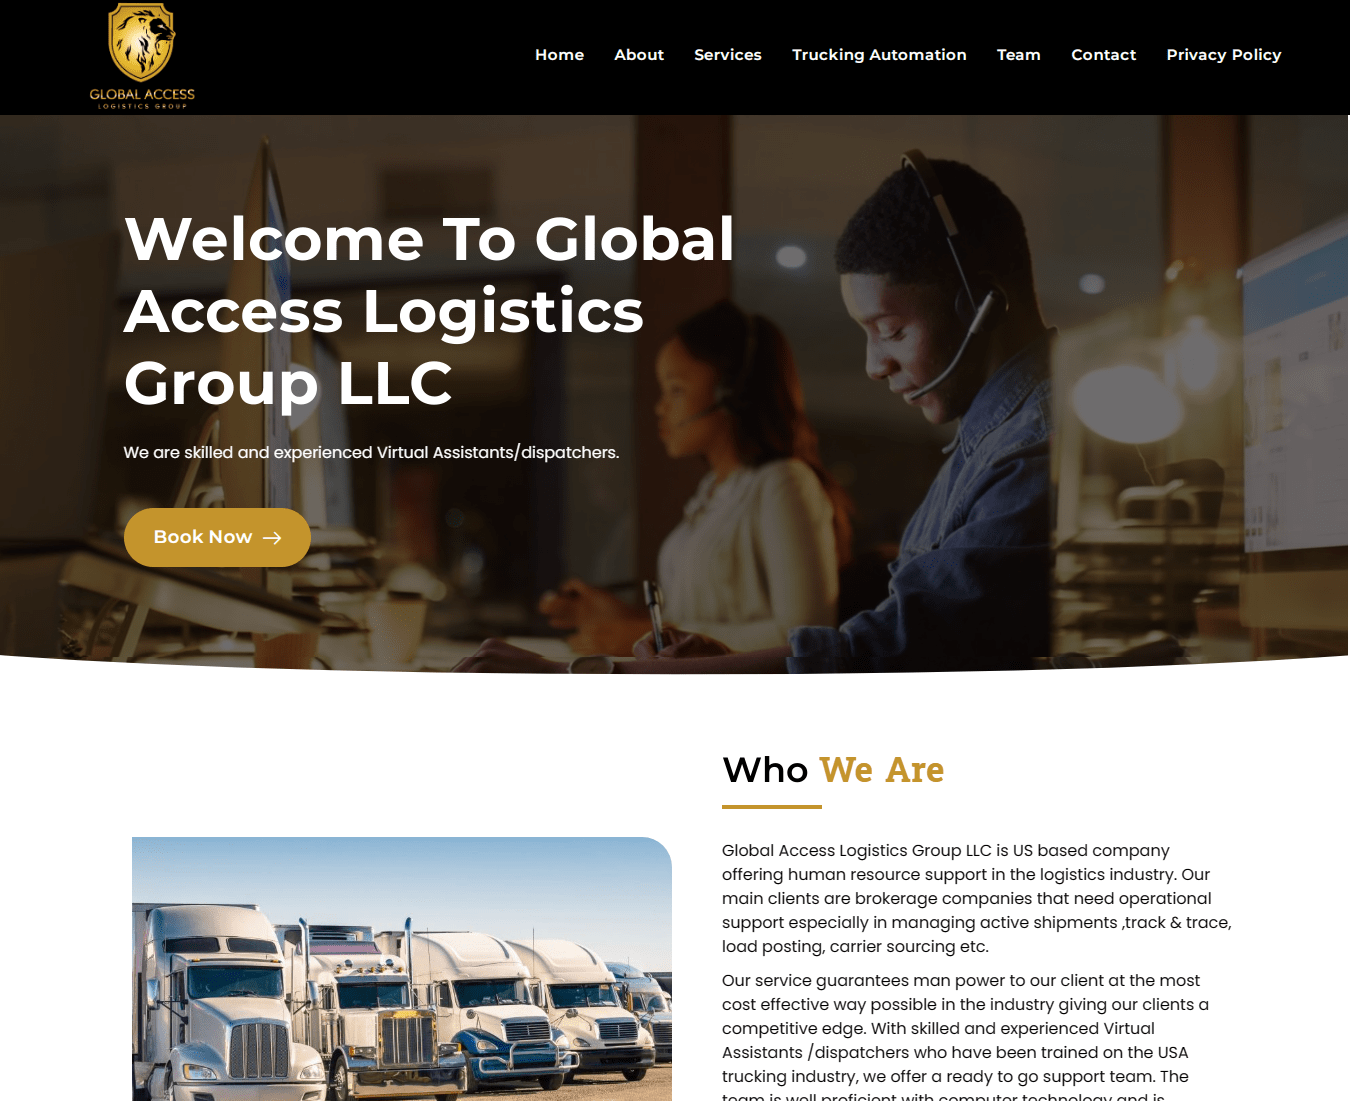 Global Access Logistics Group LLC